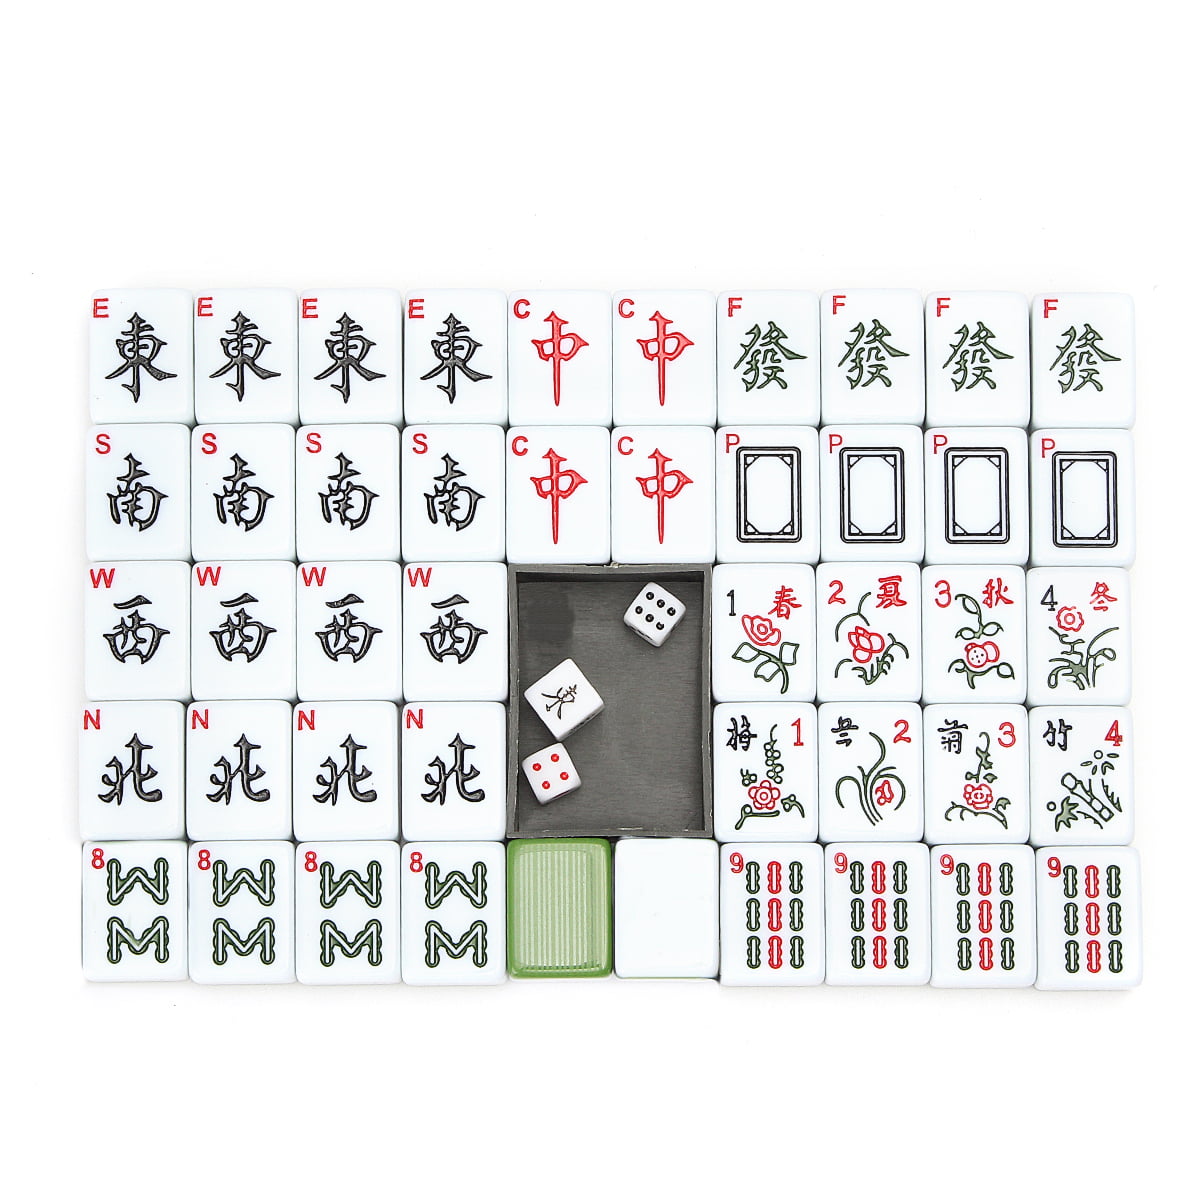 VIDOO Tragbare Retro-Mahjong-Box Seltene Chinesische 144 Mah-Jong Set Bambus Stück Mit Box